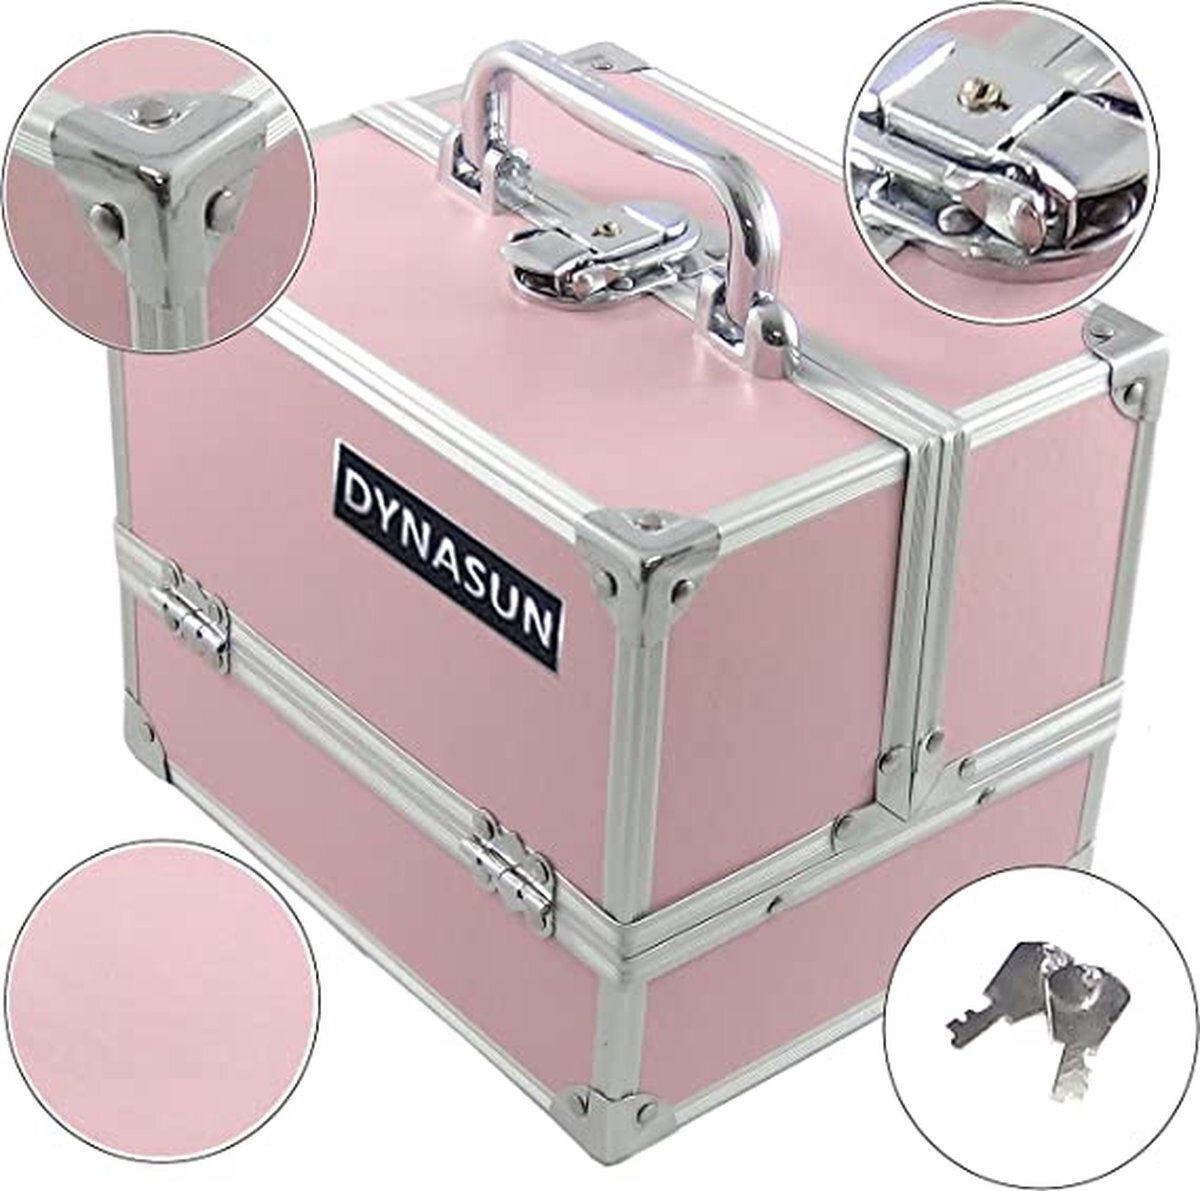 DYNASUN BS35 22 x 17 x 18 cm roze designer beautycase make-upkoffer cosmeticakoffer sieradenvak beautycase reiskoffer, Bs35 roze., 24 cm, cosmeticakoffer